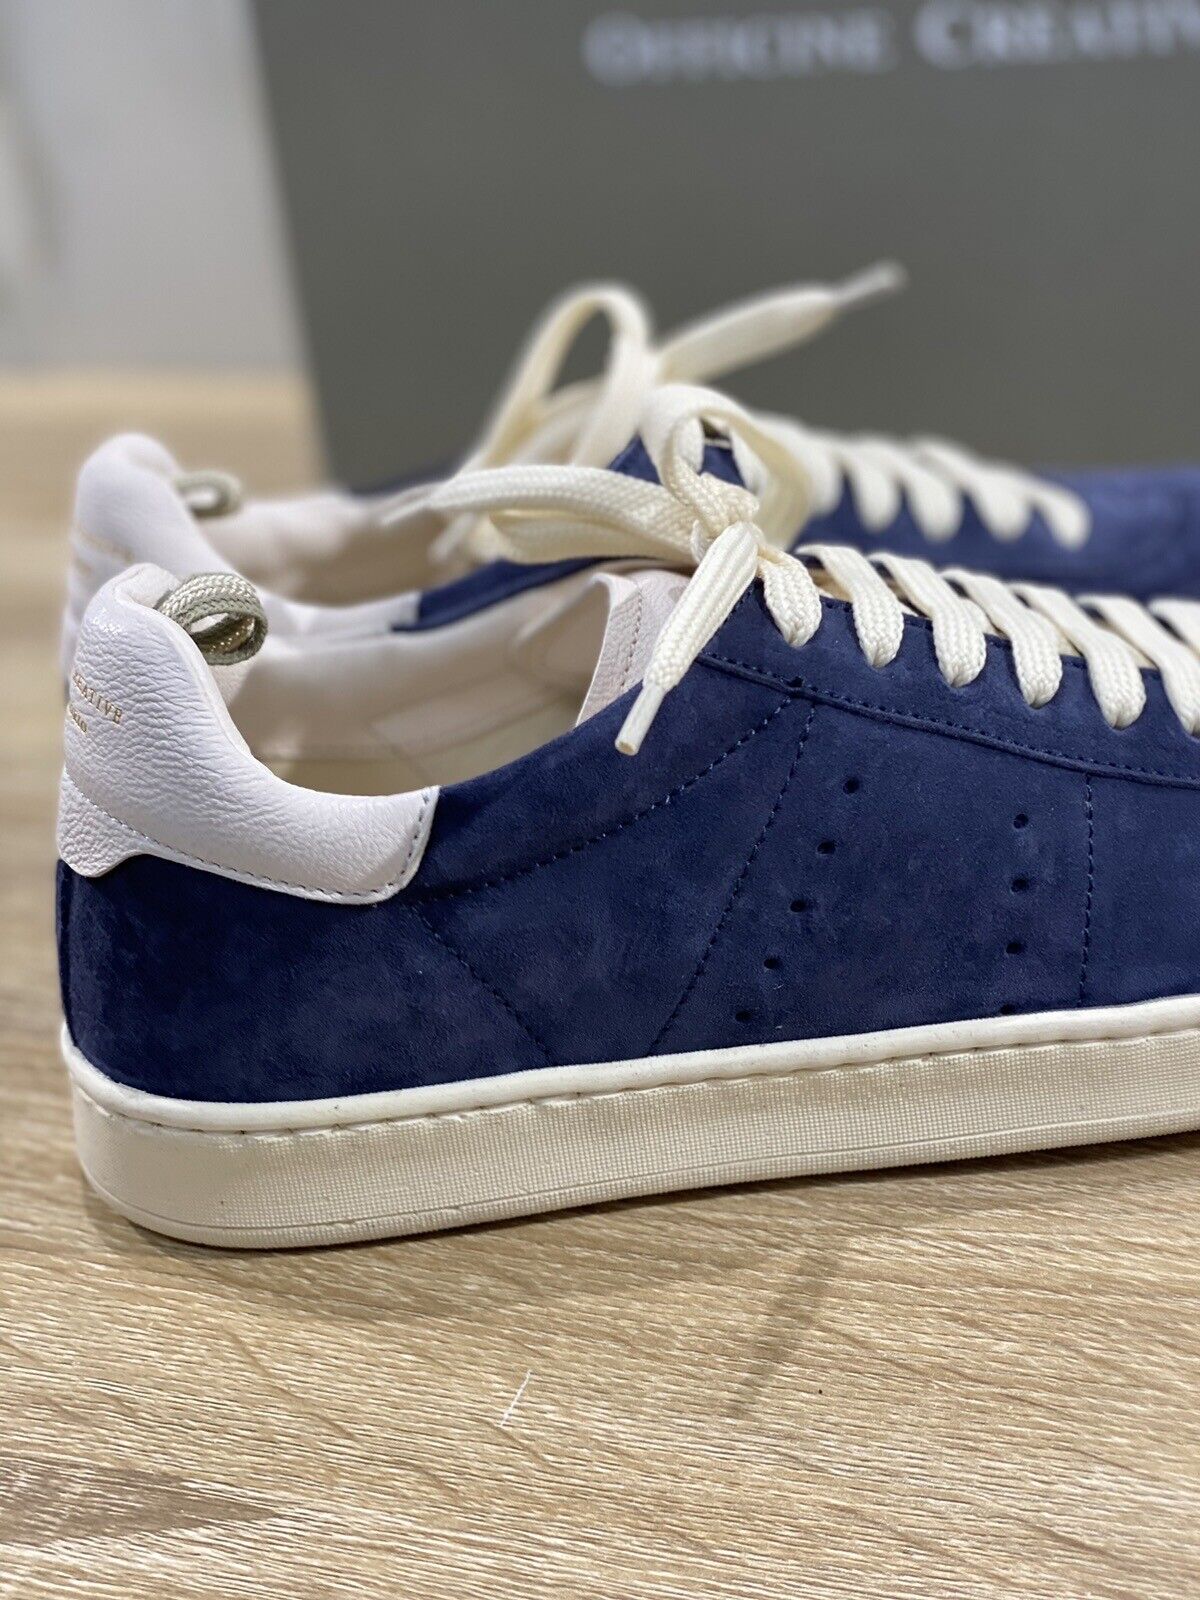 Officine Creative Kombo Sneaker Uomo Suede Blu Luxury Soft Fondo Lattice 41